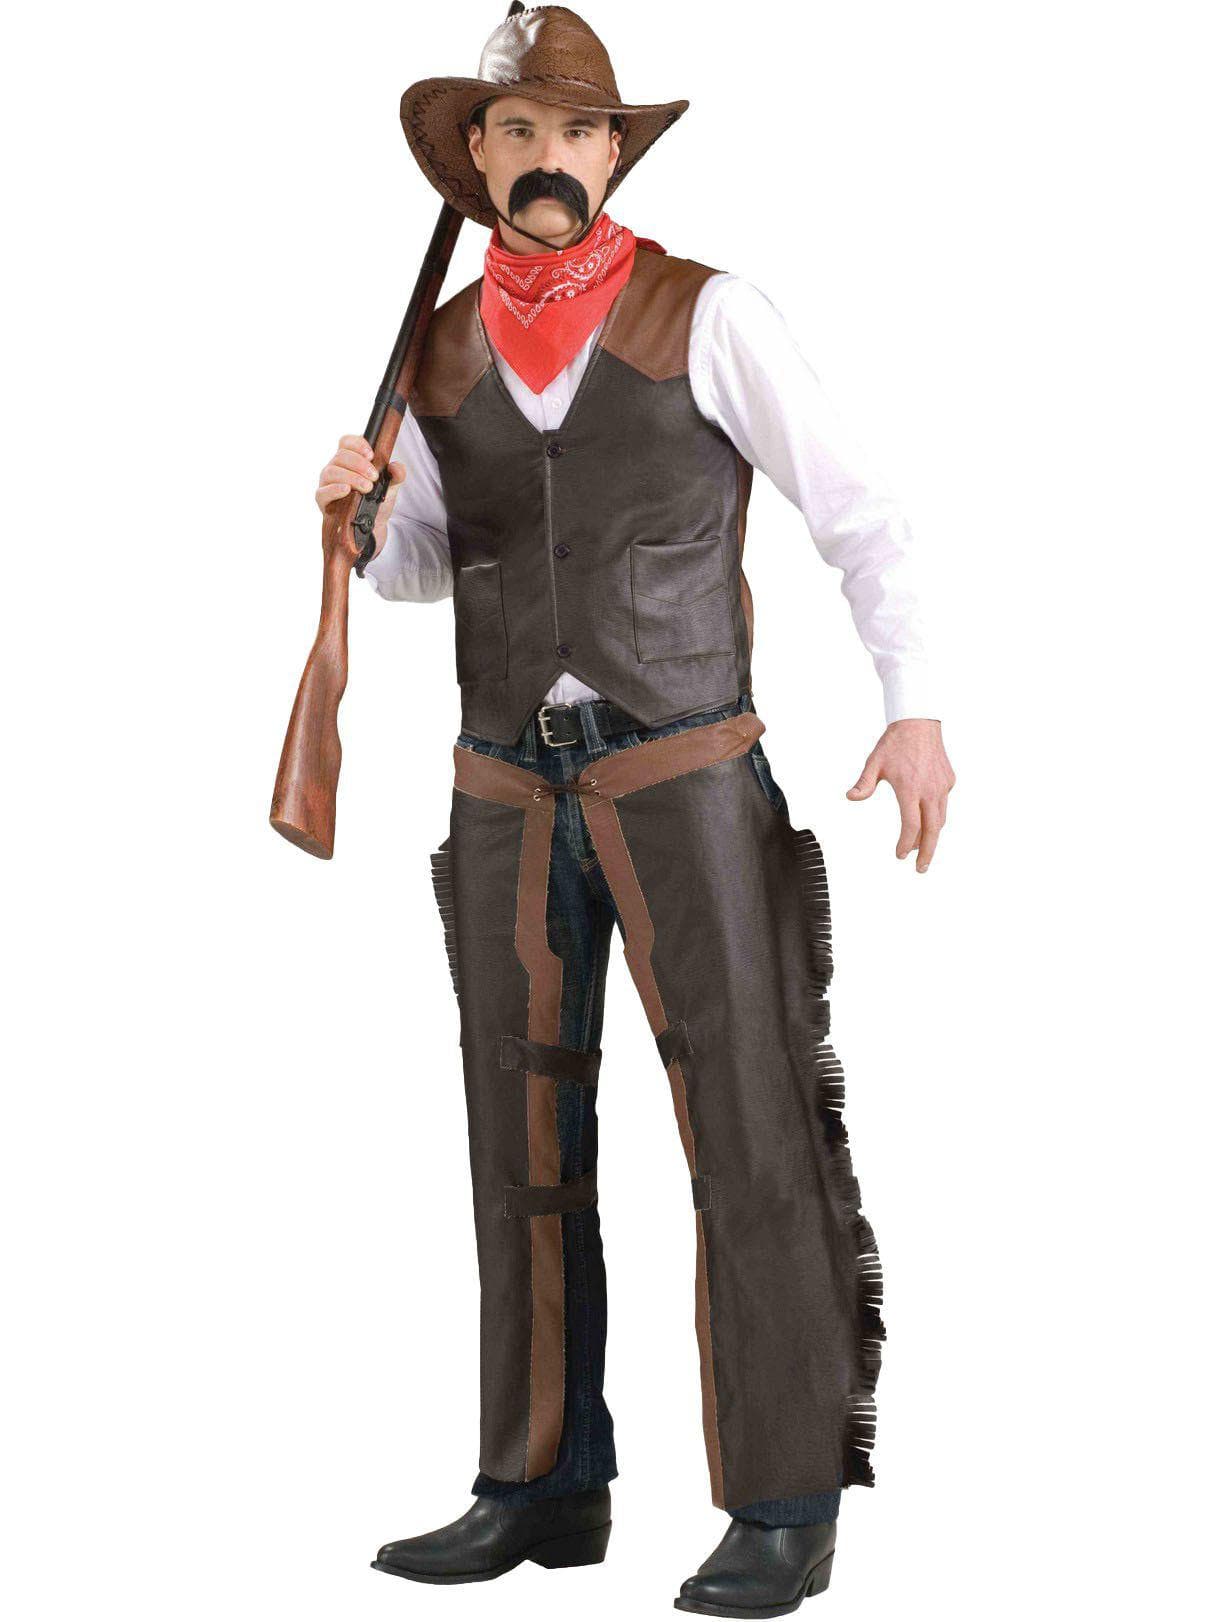 Cowboy Chaps - costumes.com